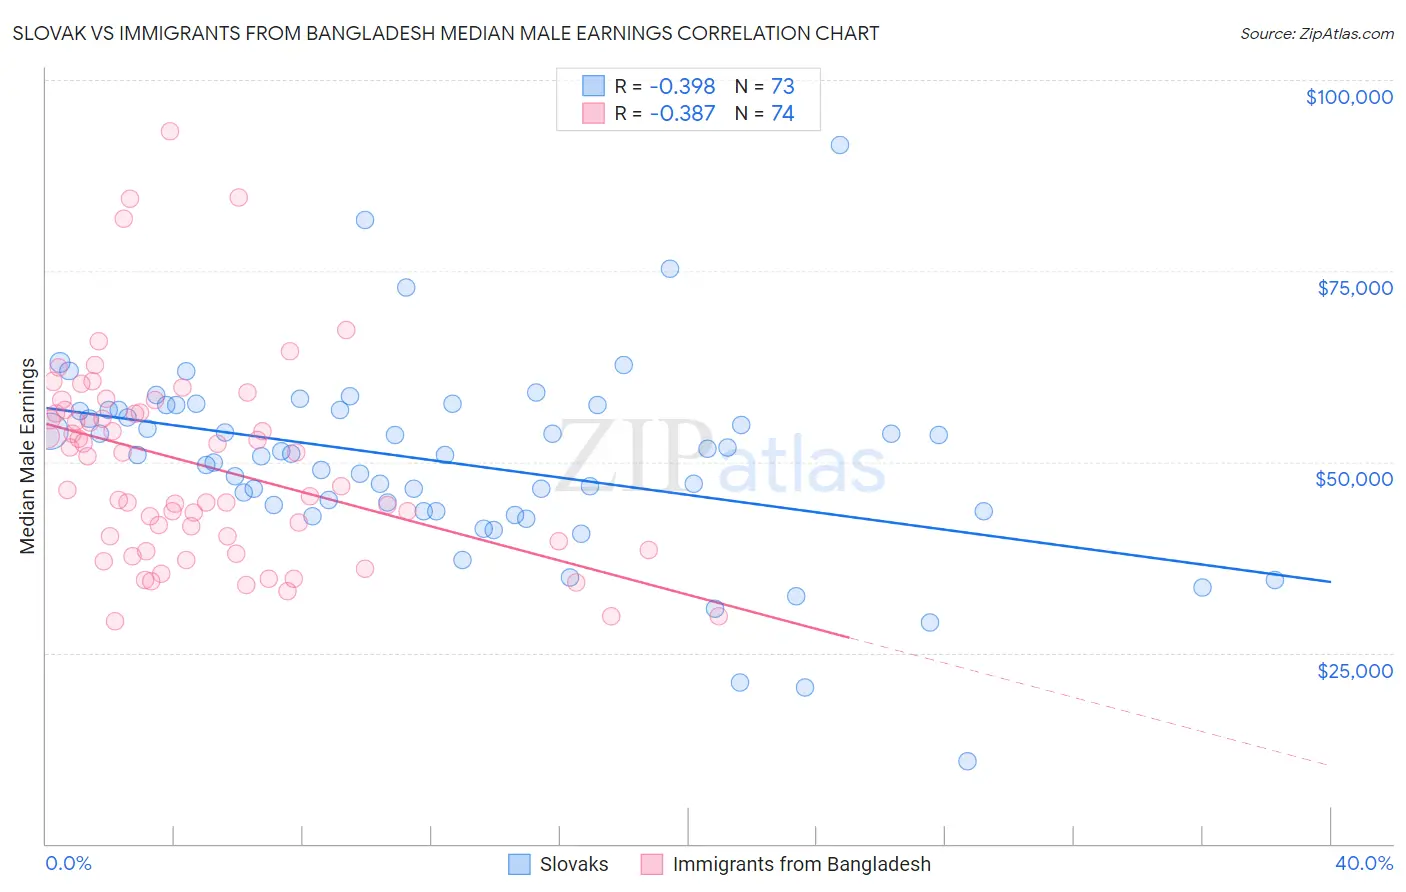 Slovak vs Immigrants from Bangladesh Median Male Earnings